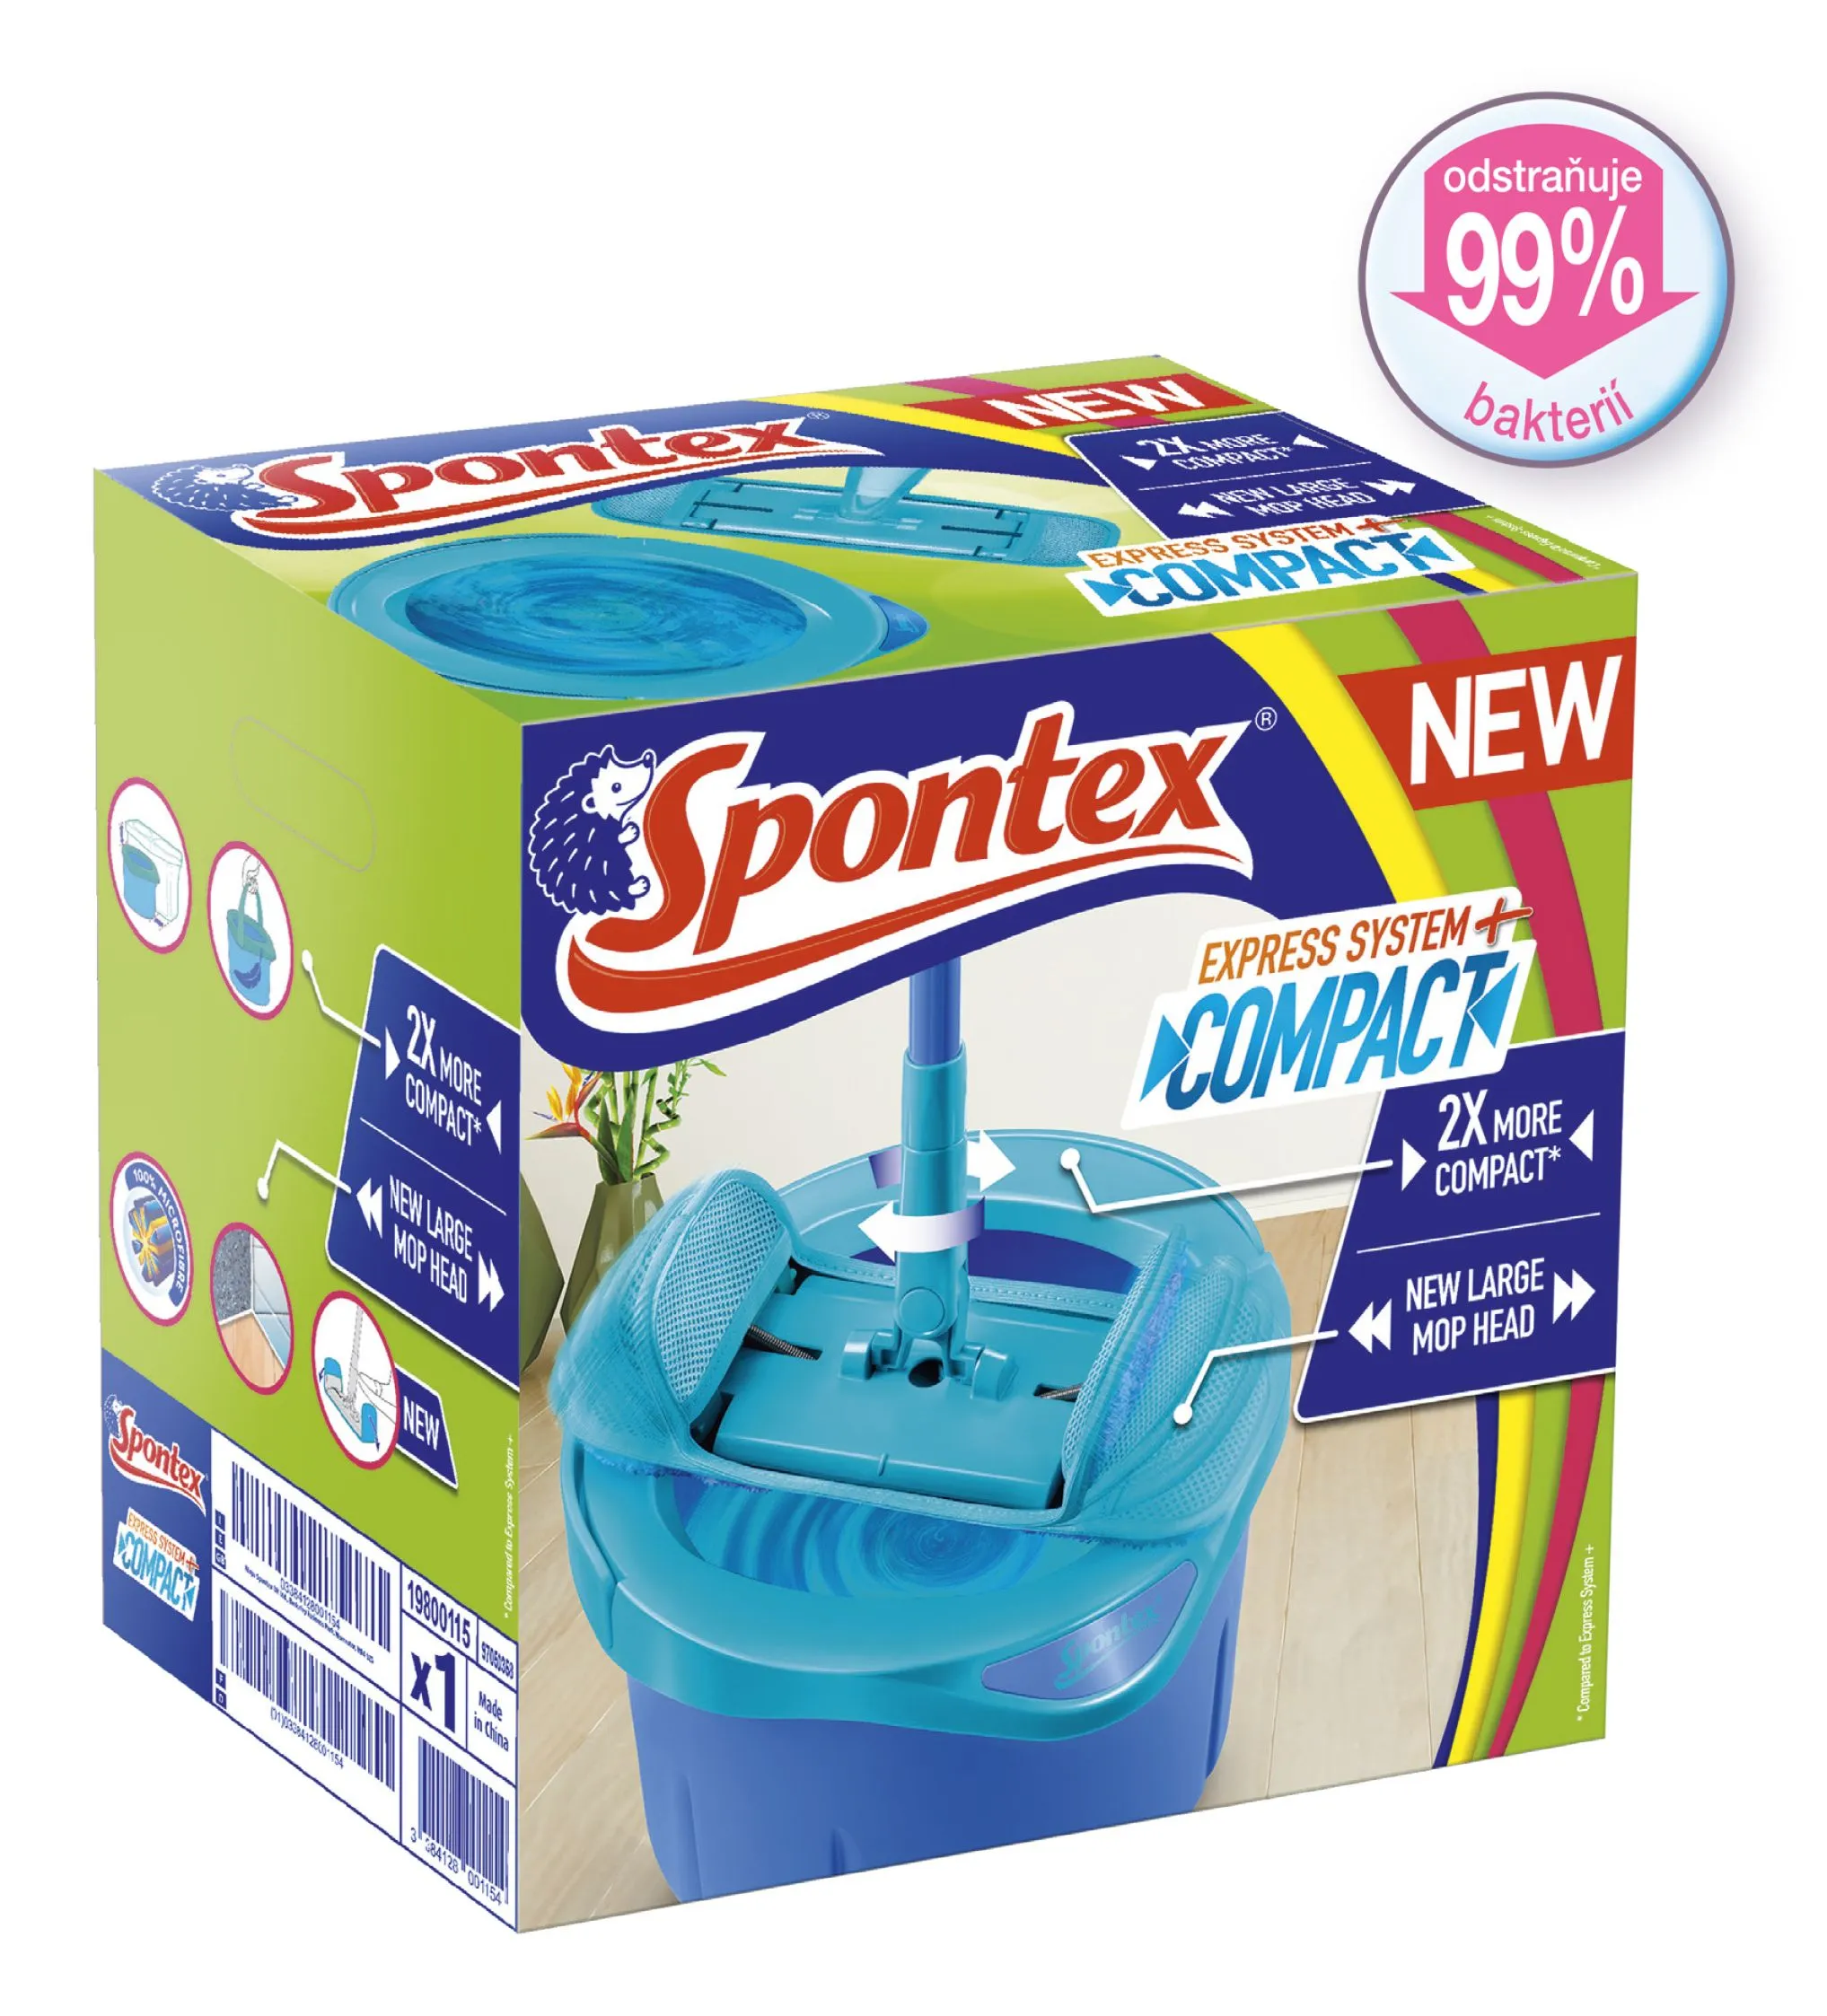 Spontex Express system+ COMPACT